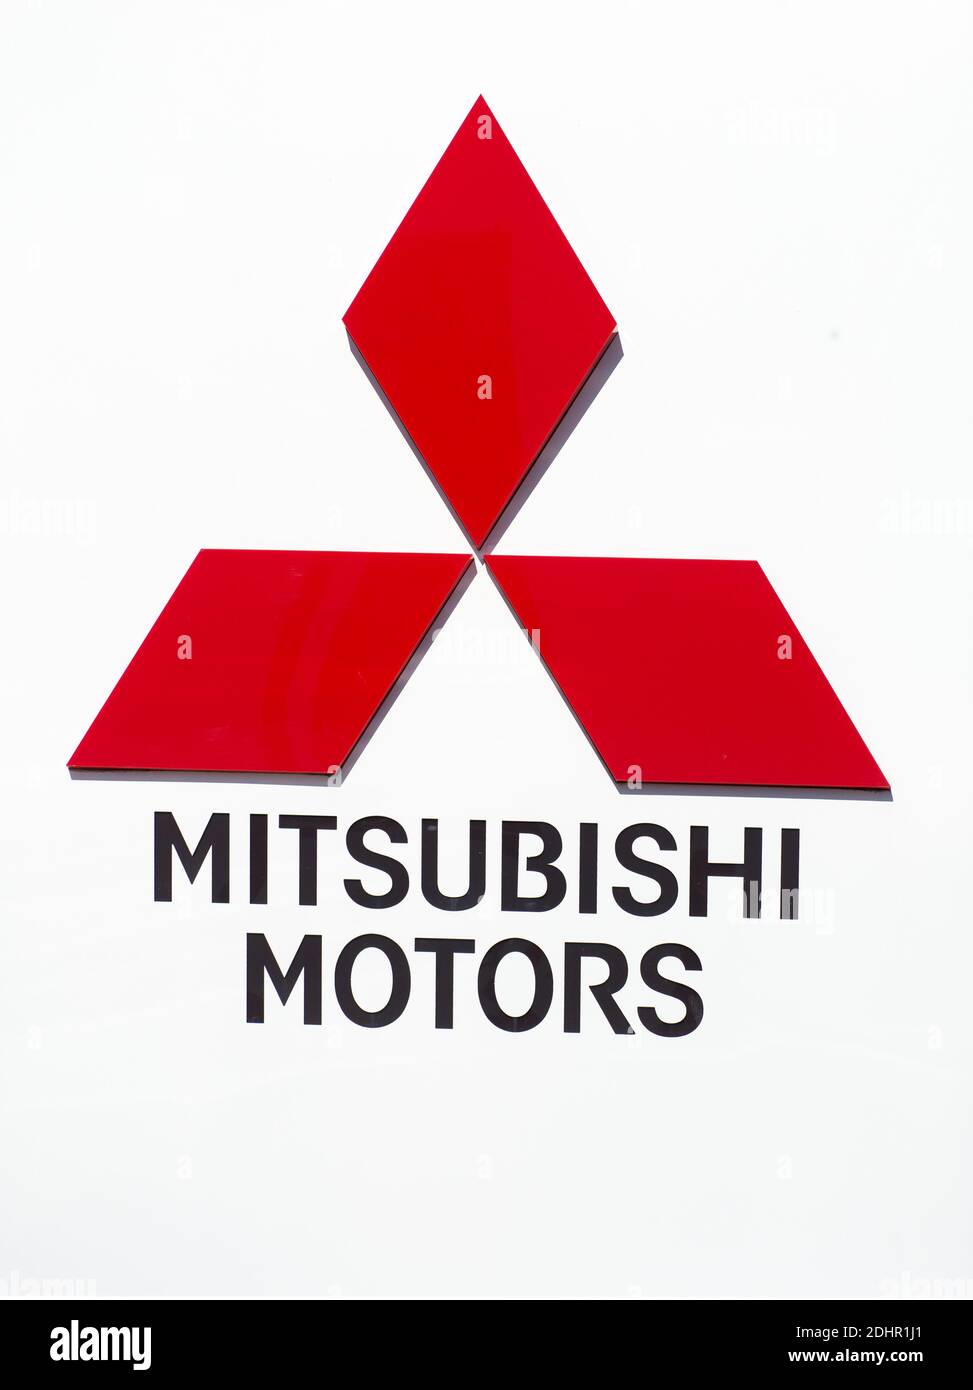 Mitsubishi Motors Corp. logo Stock Photo